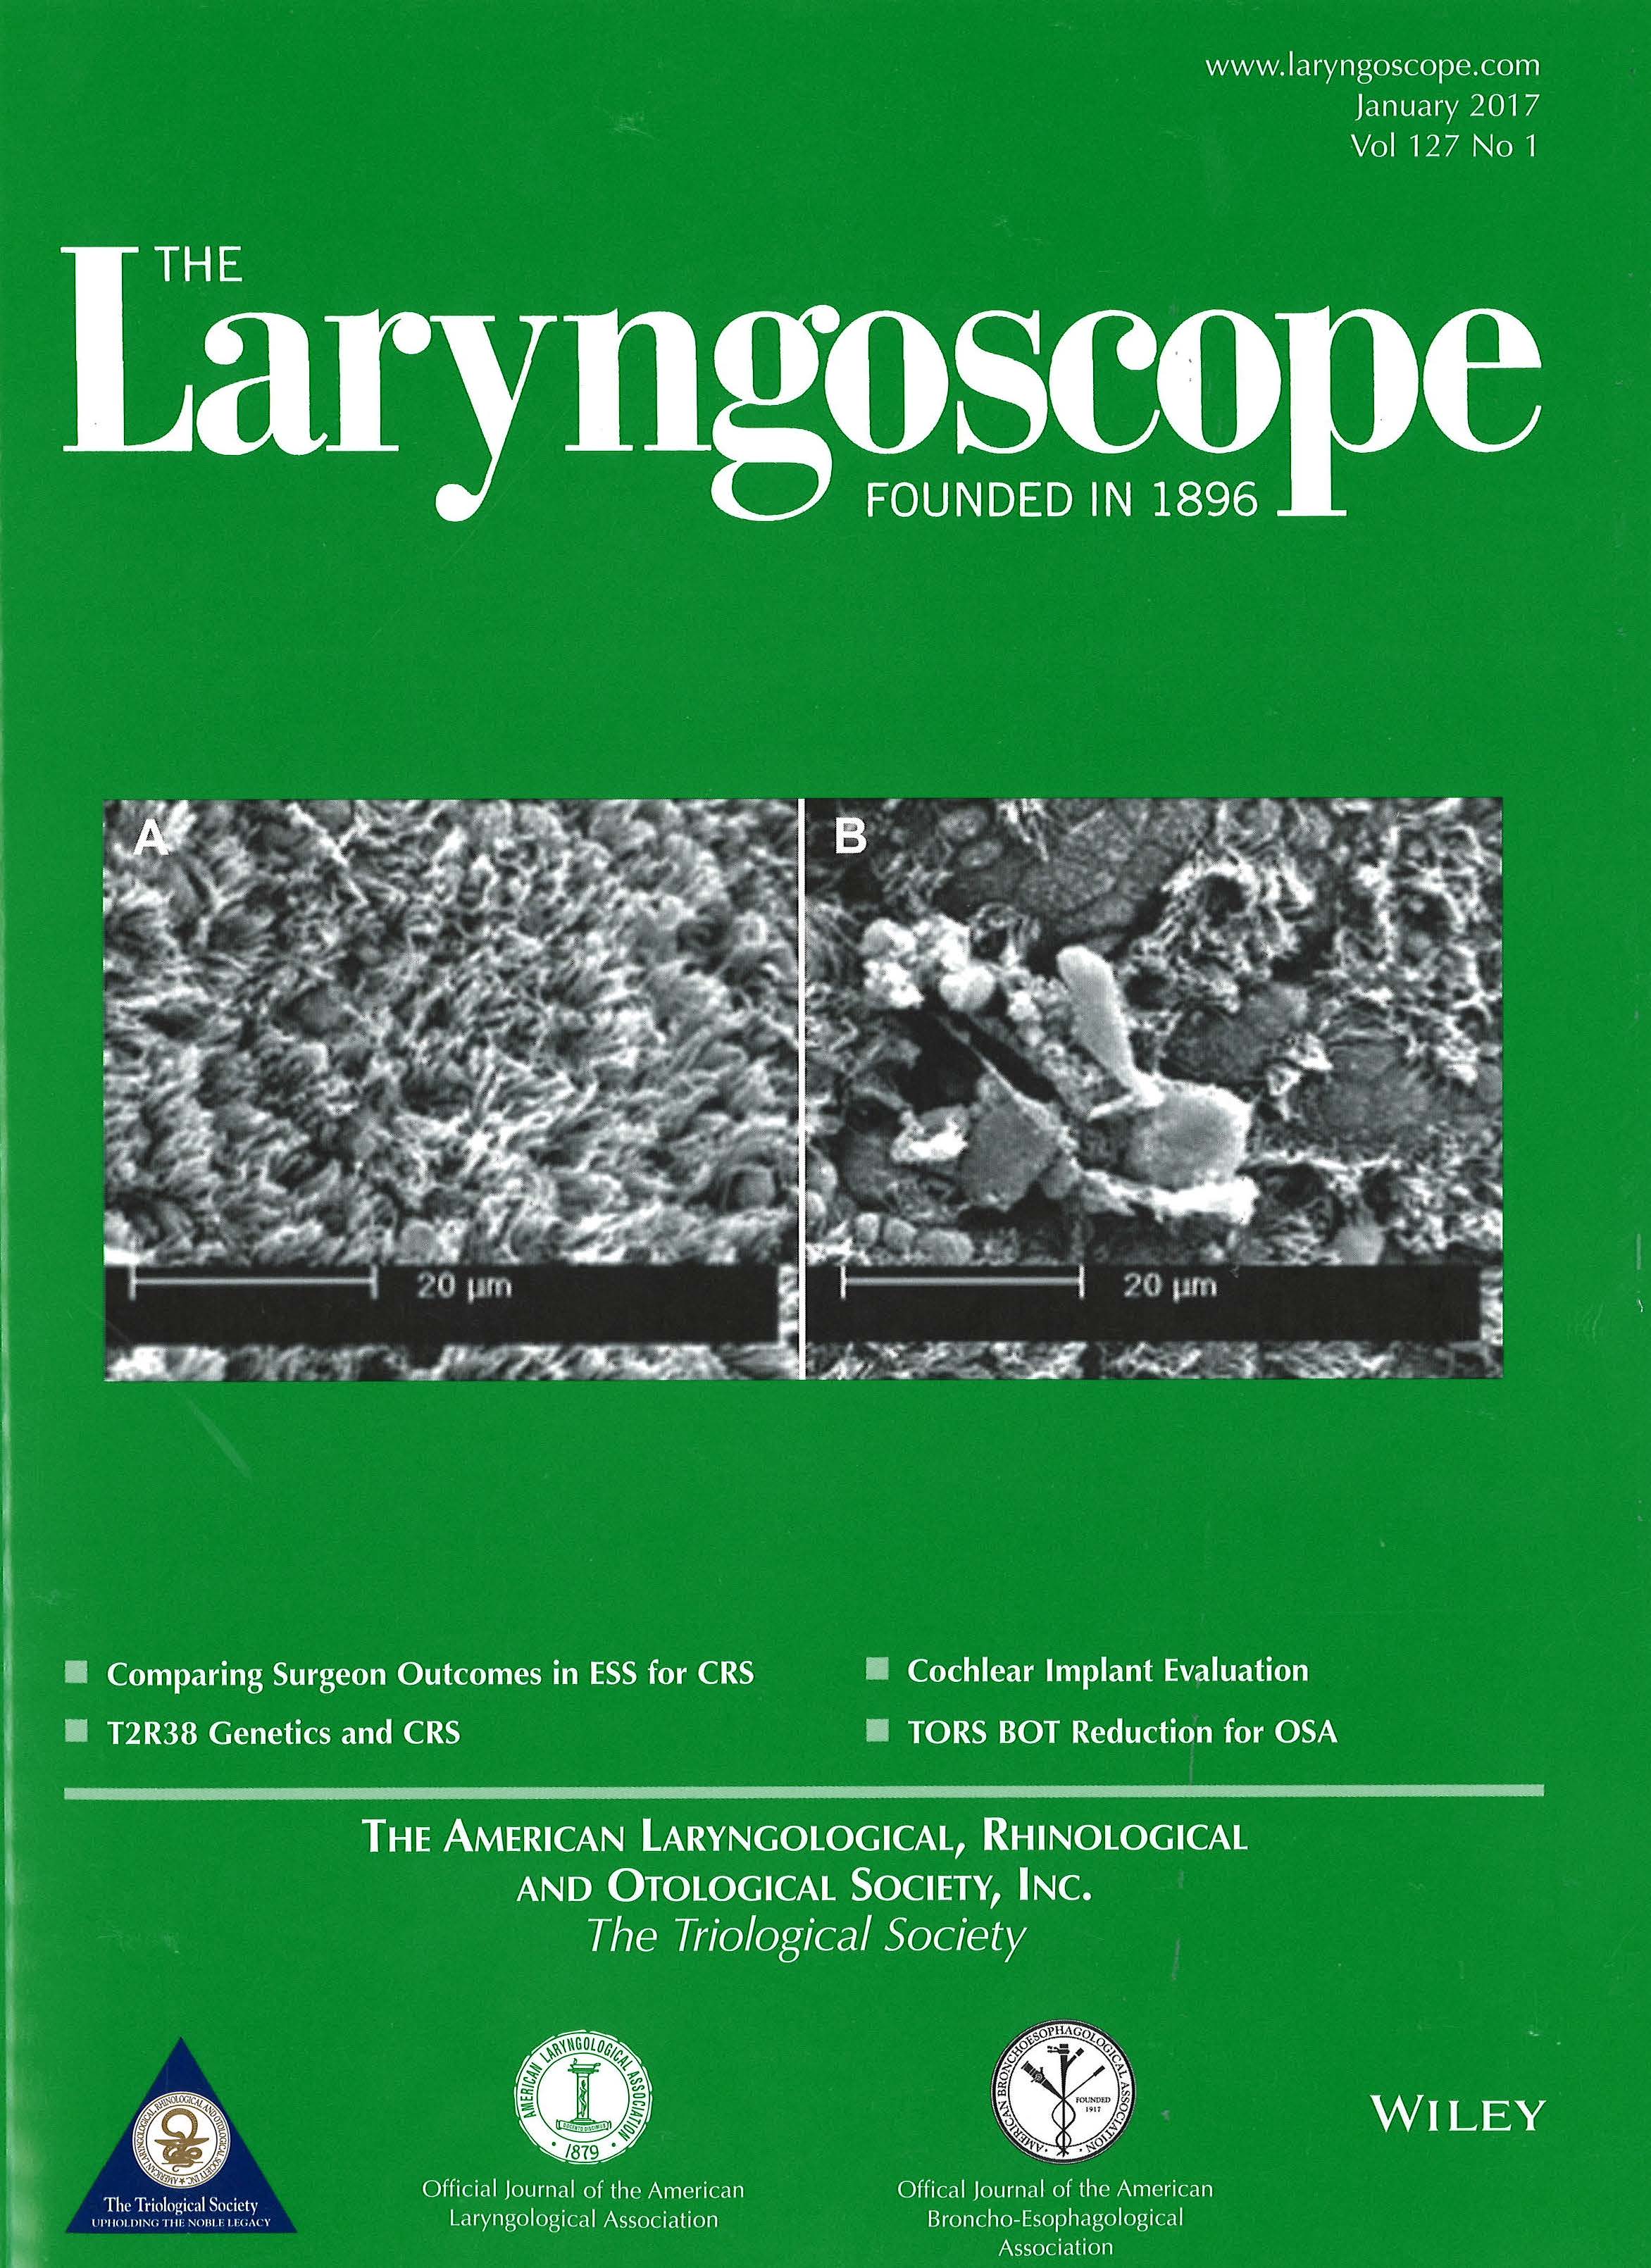 The Laryngoscope